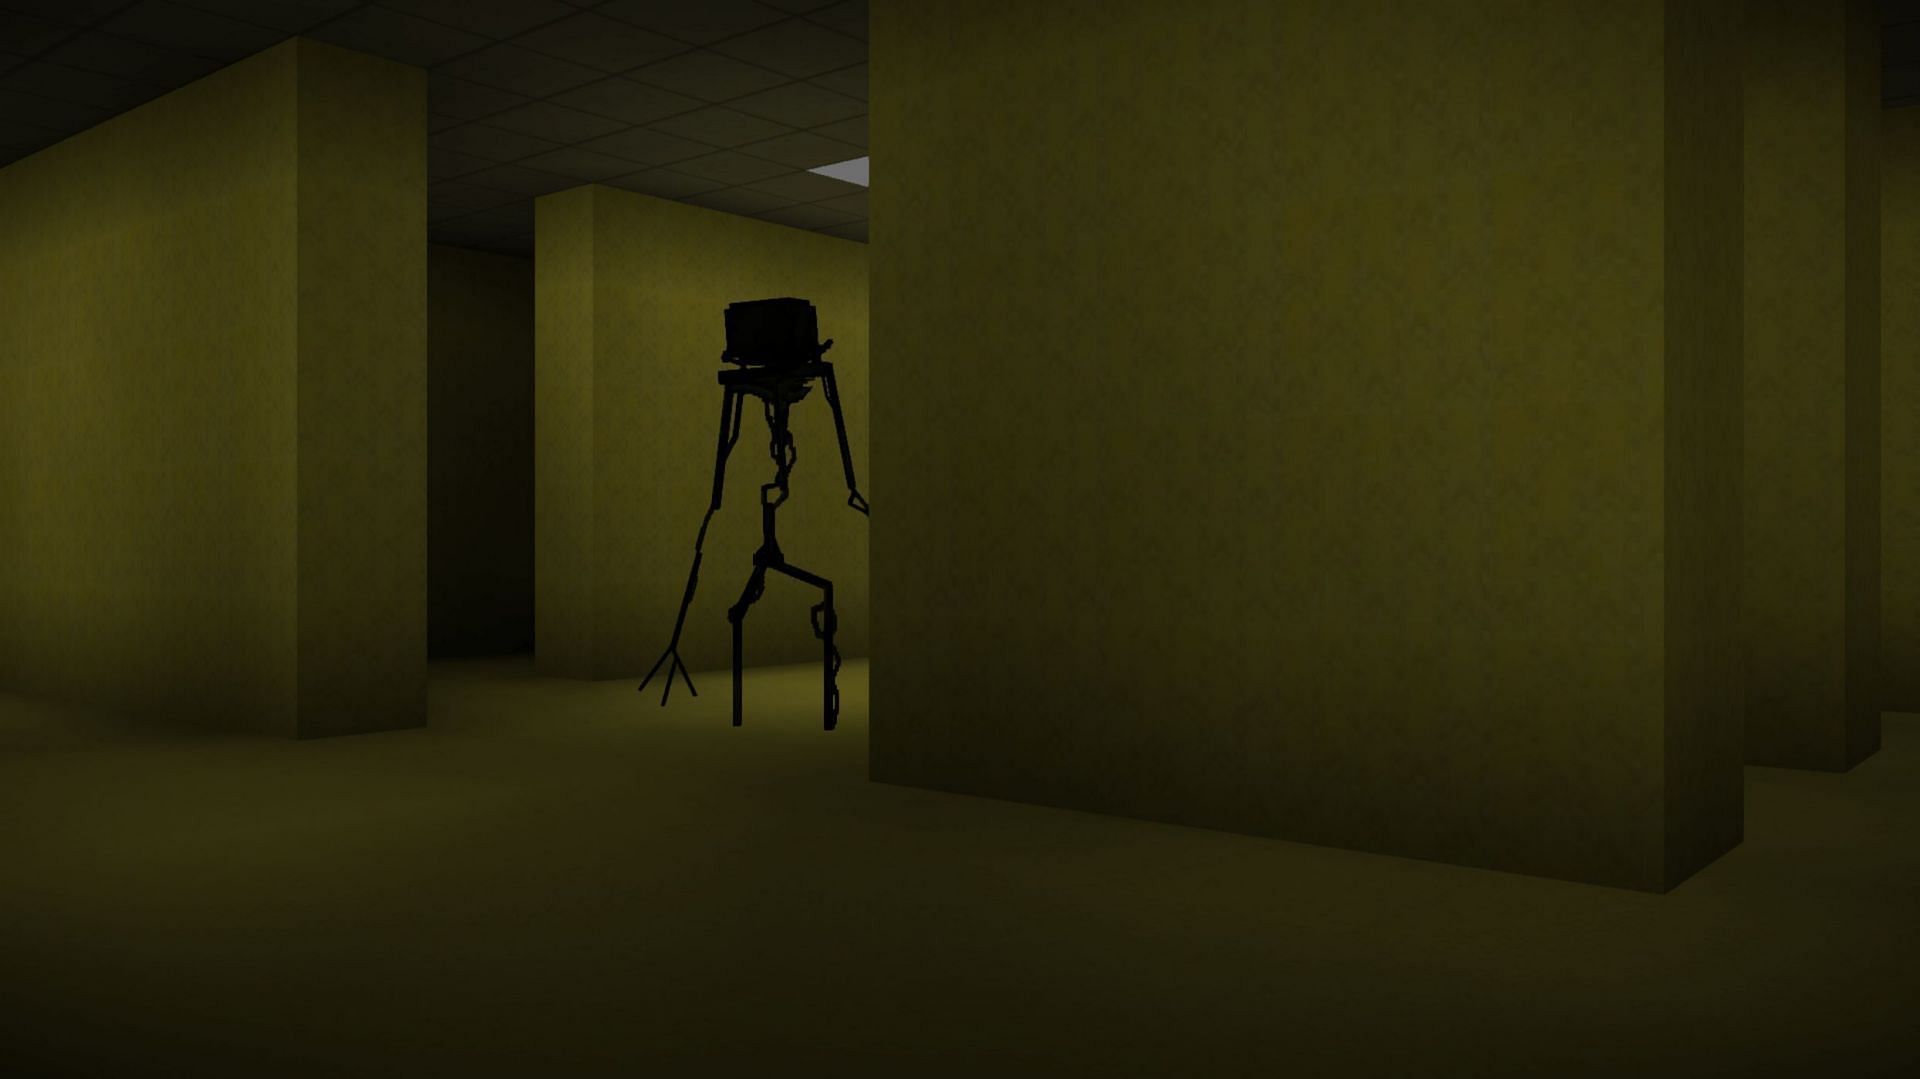 The Backrooms recreates a popular Found Footage video found online (Image via VHSVince/MinecraftMaps.com)